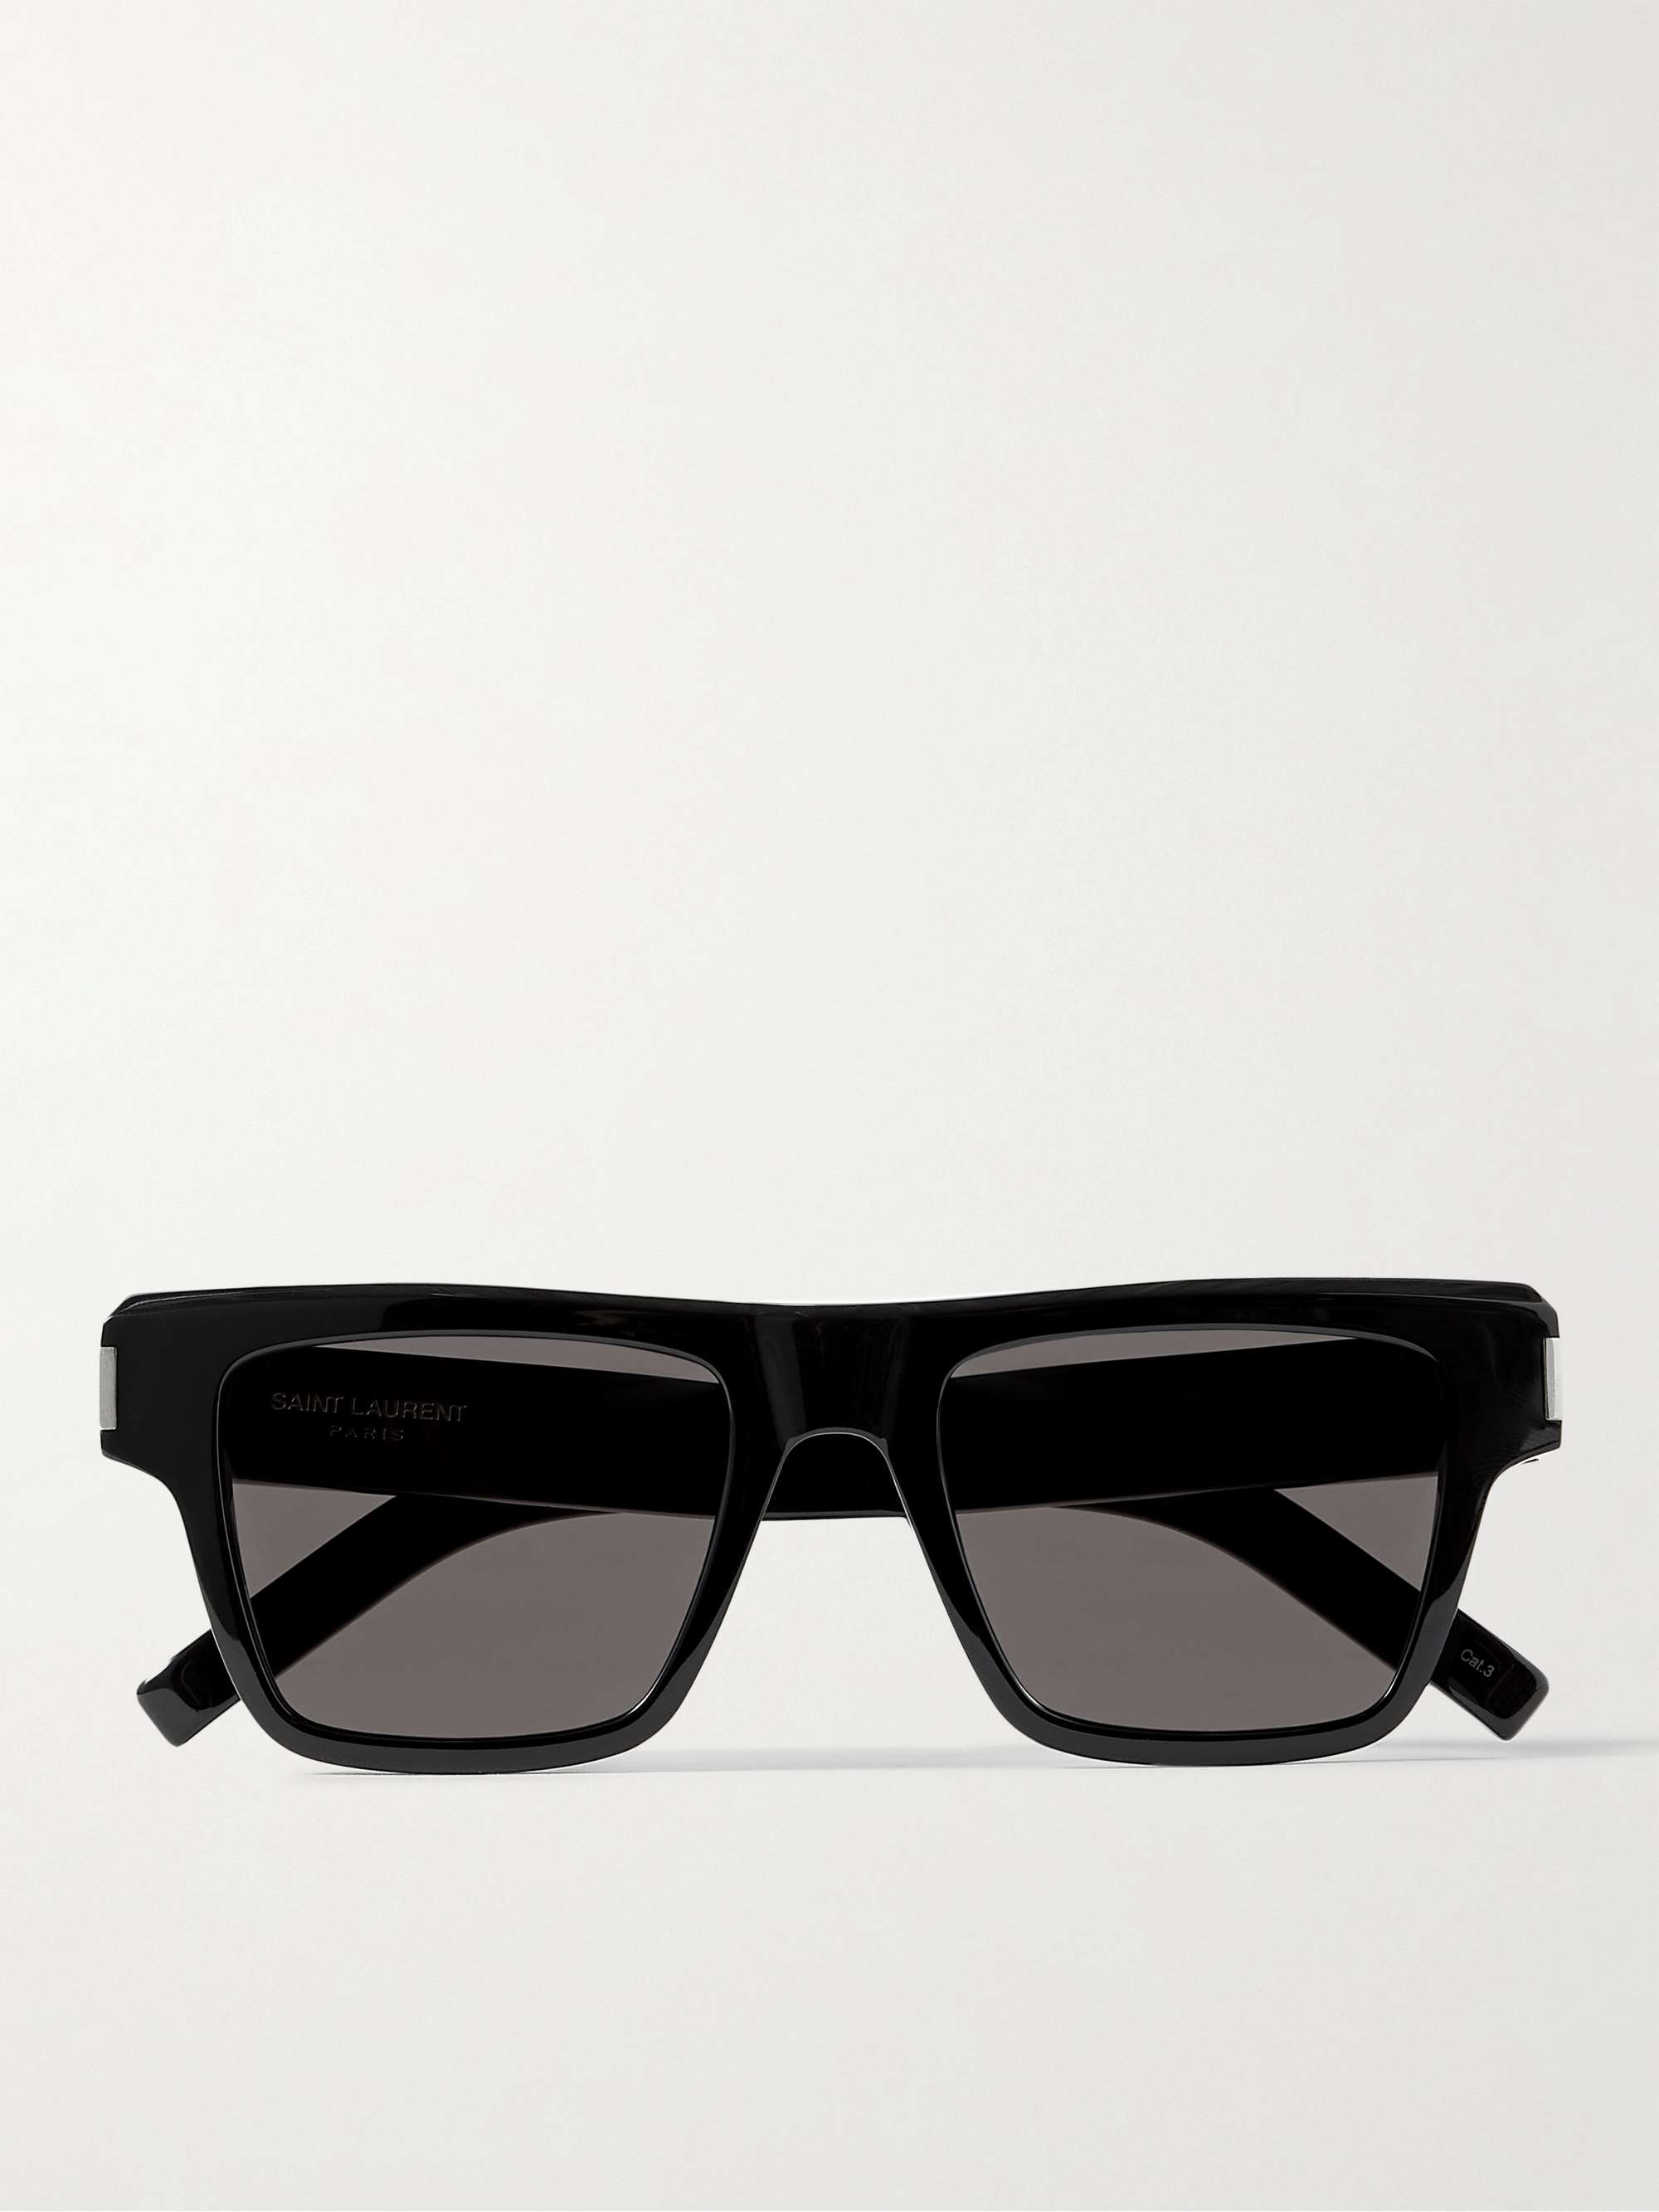 SAINT LAURENT EYEWEAR New Wave Square-Frame Acetate Sunglasses